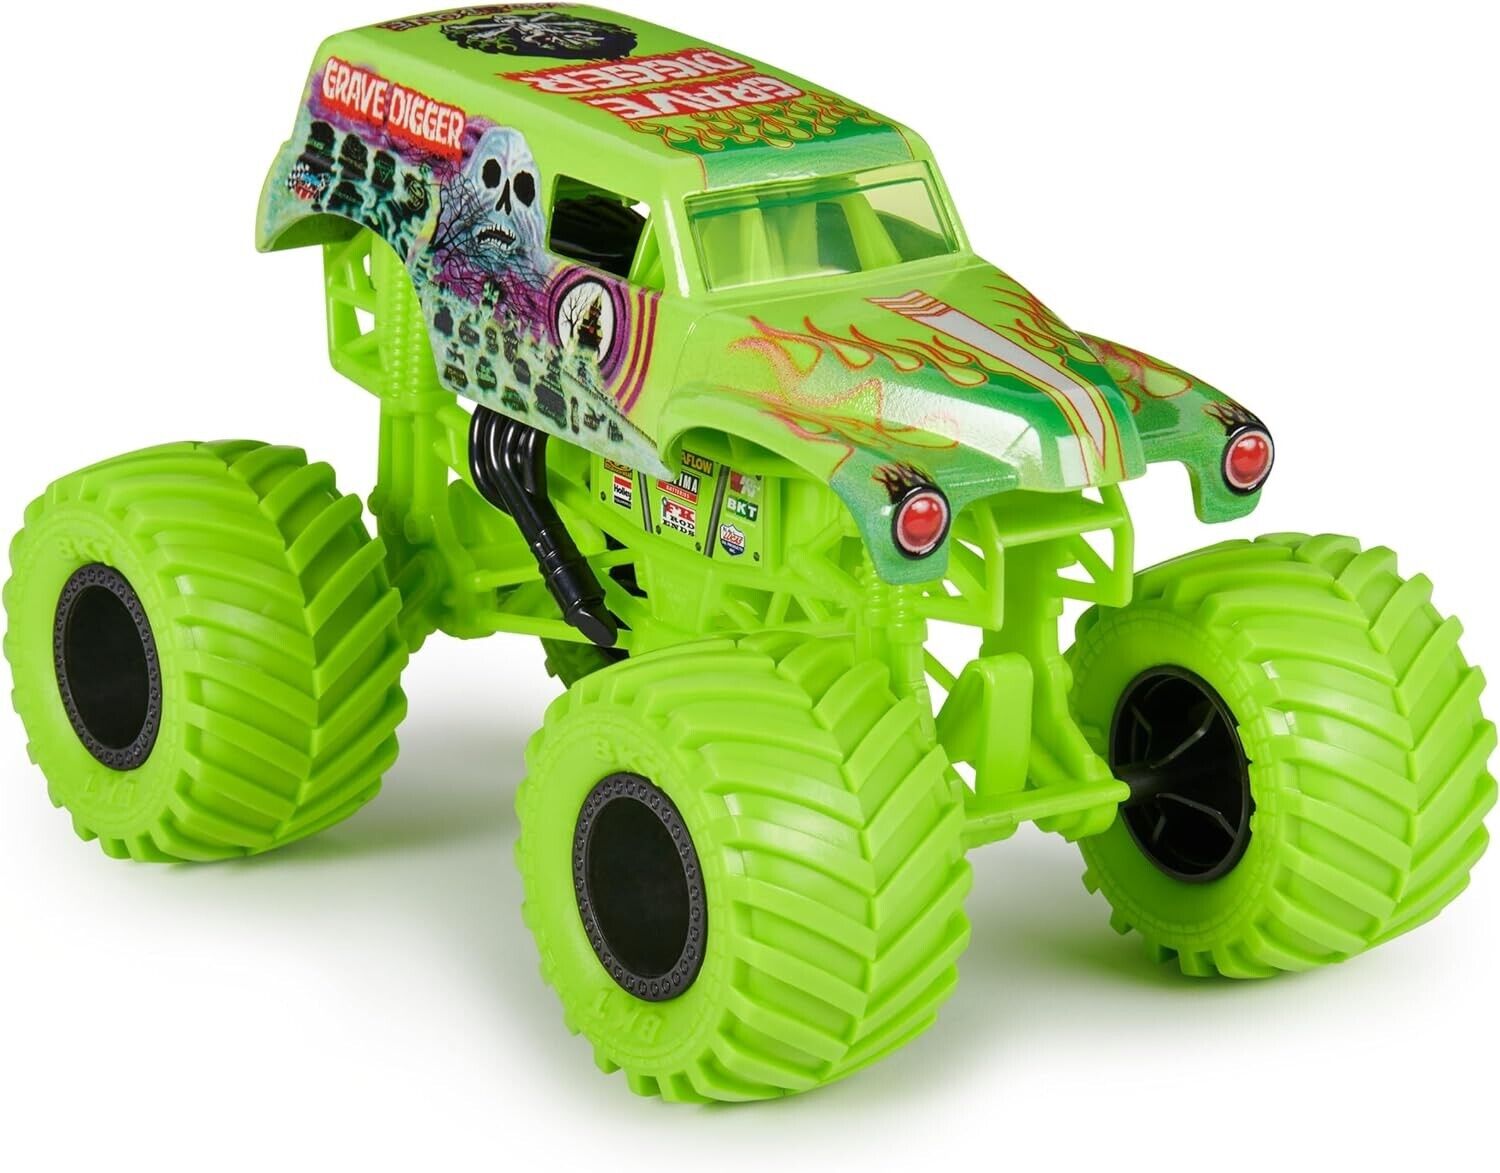 Monster Jam, Official Grave Digger Monster Truck,Collector Die-Cast Vehicle,1:24